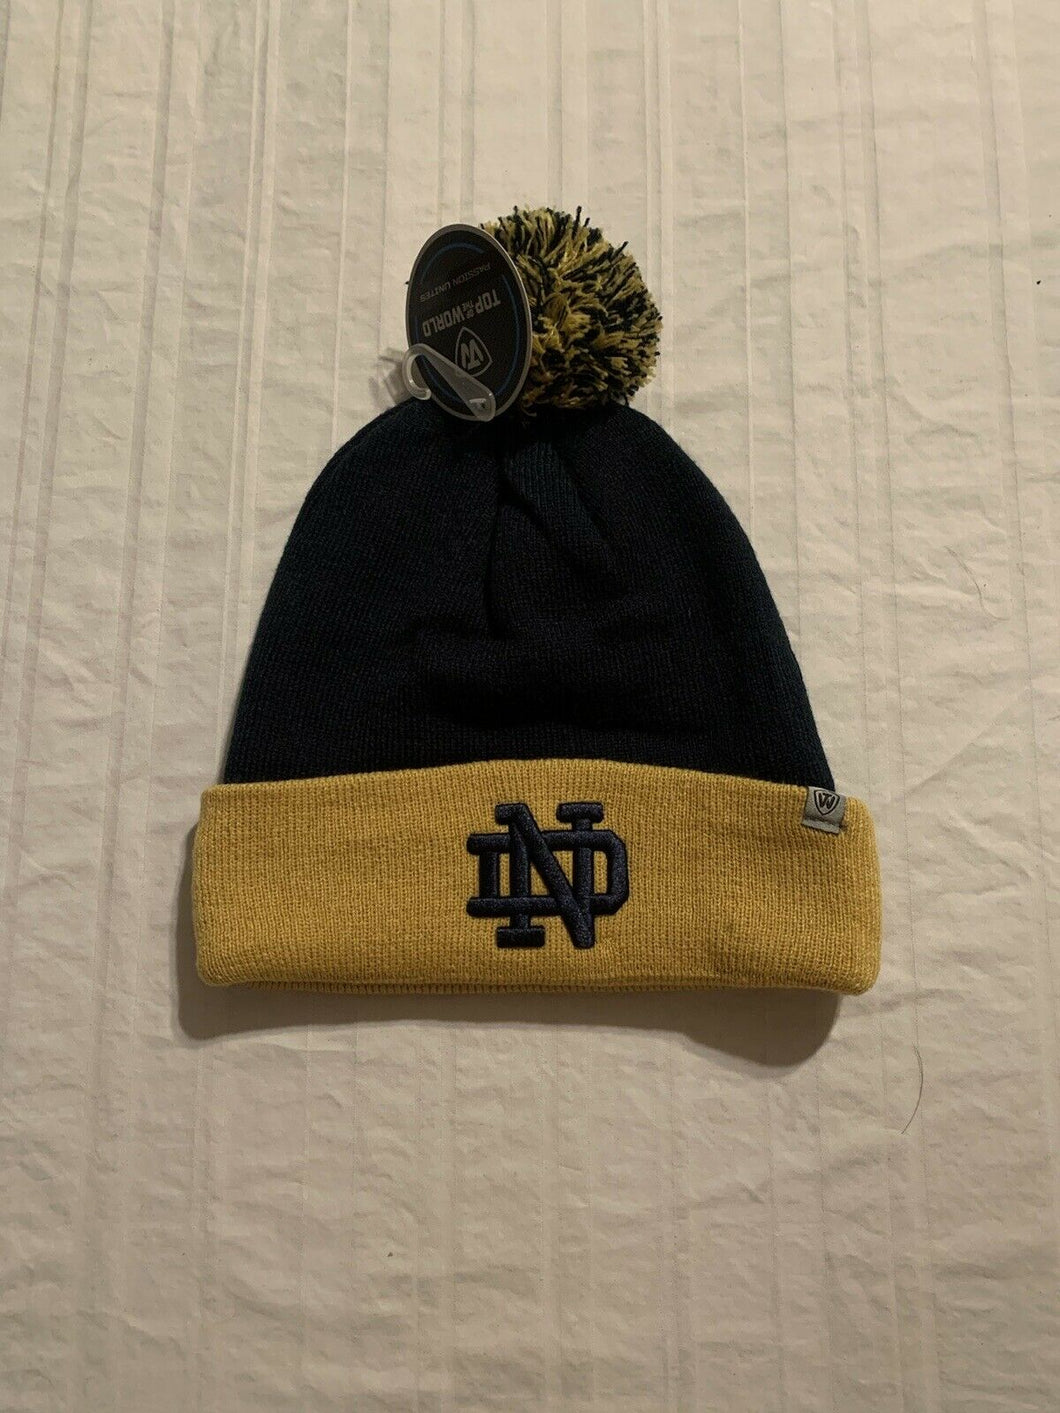 Notre Dame Fighting Irish NCAA Knit Winter Ski Cap Hat Beanie Top of the World - Casey's Sports Store